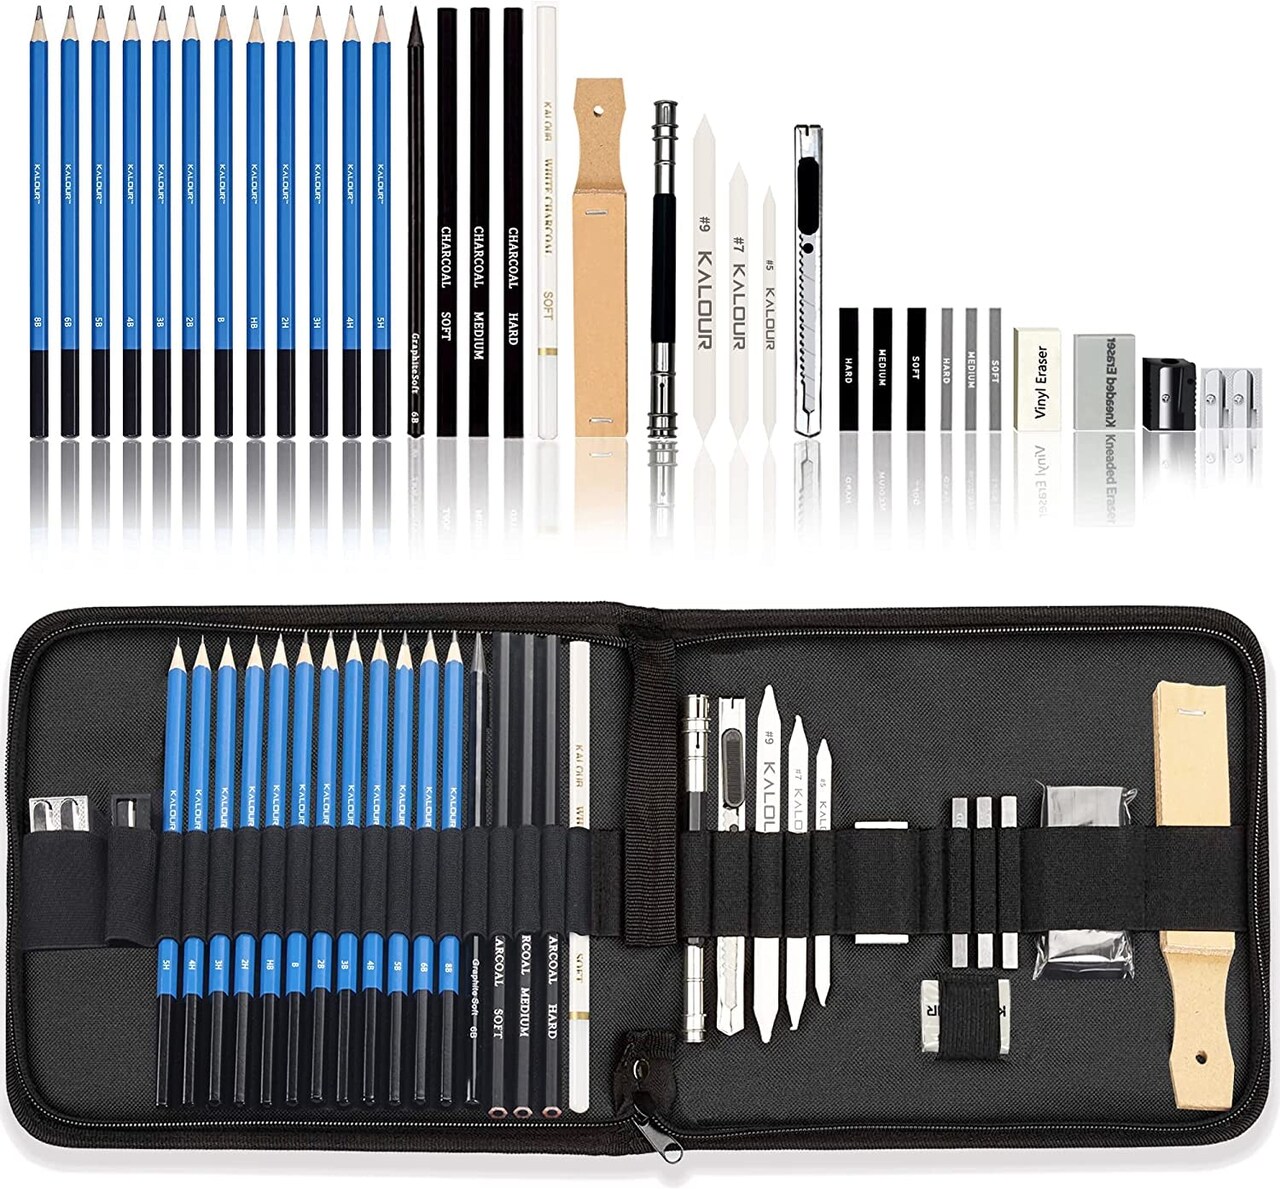 KALOUR 33 Pieces Pro Drawing Kit Sketching Pencils Set,Portable